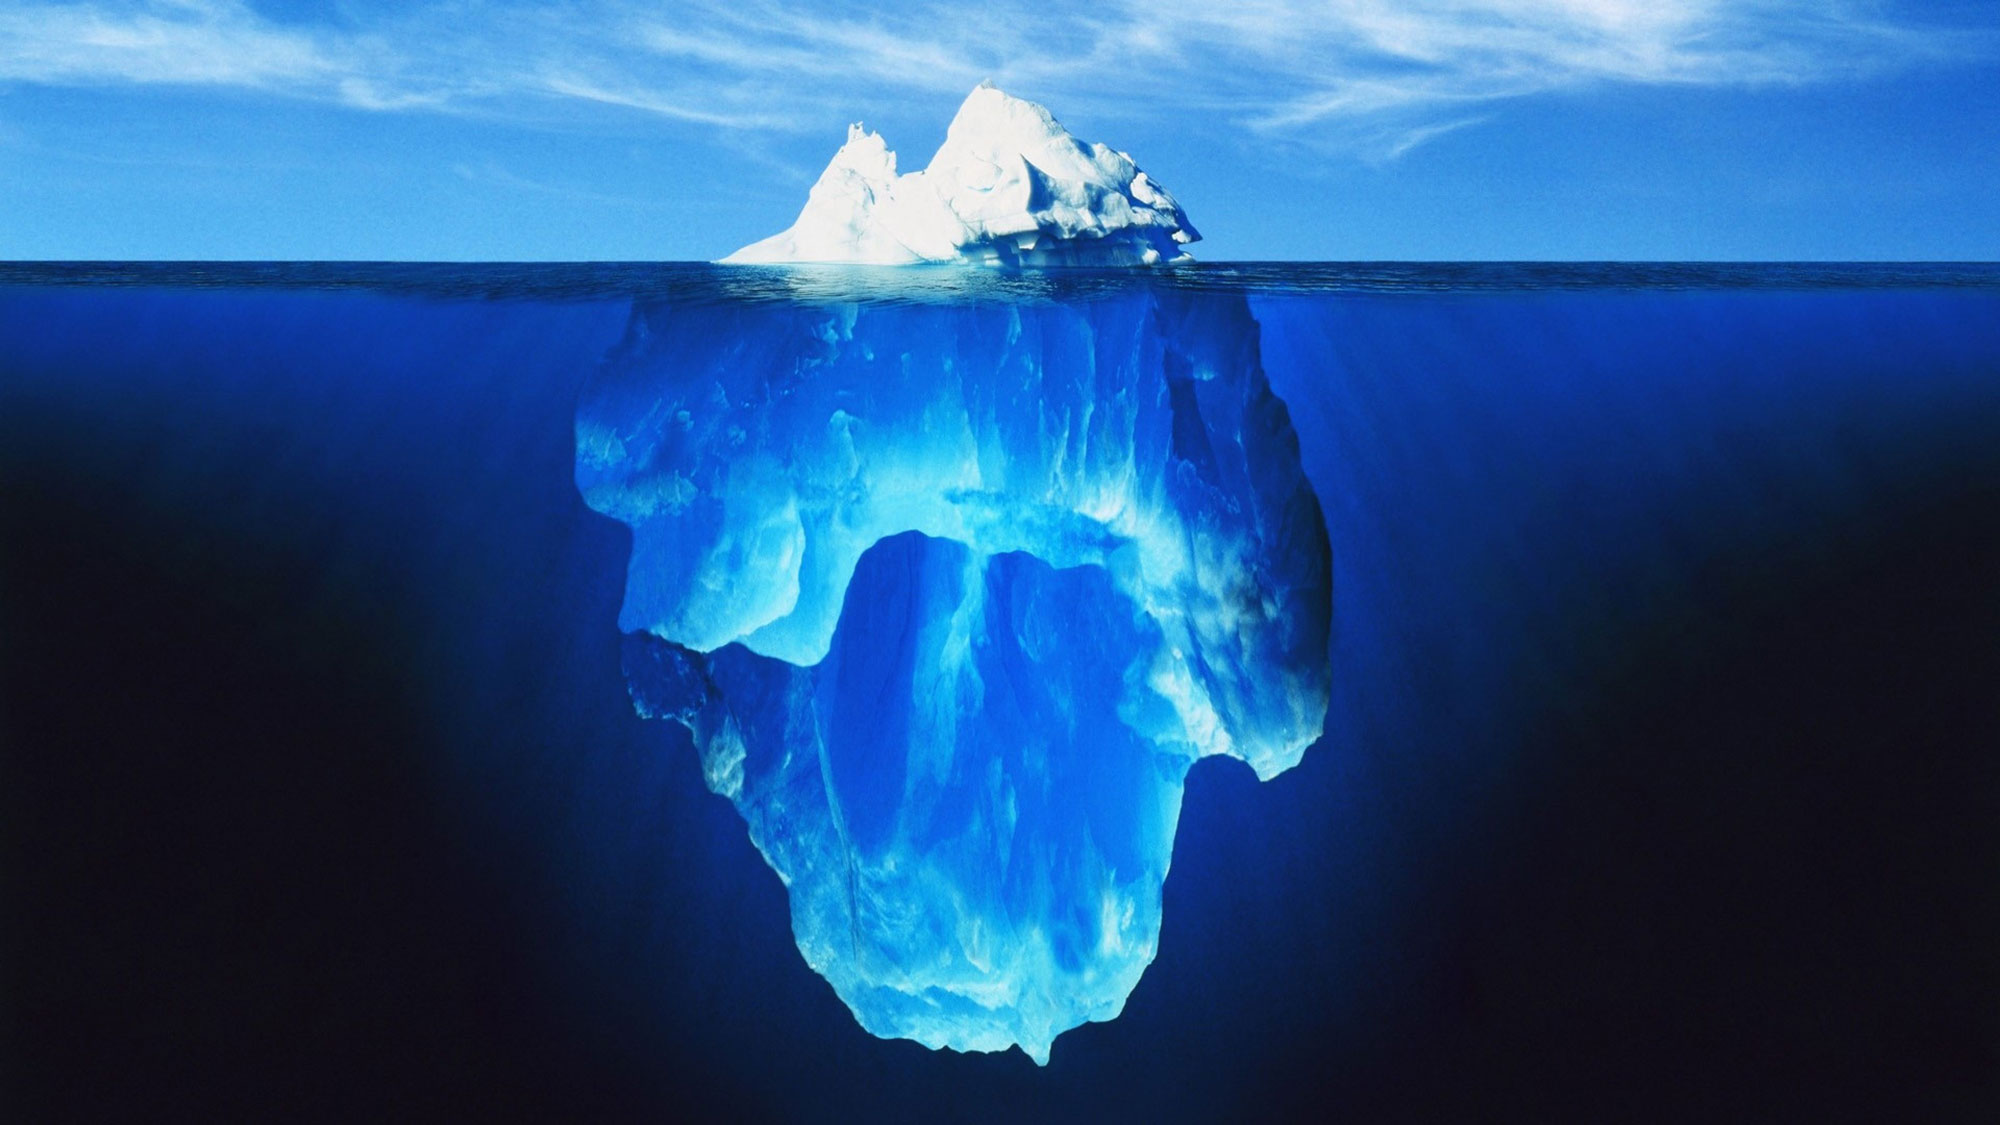 Vue iceberg totalité